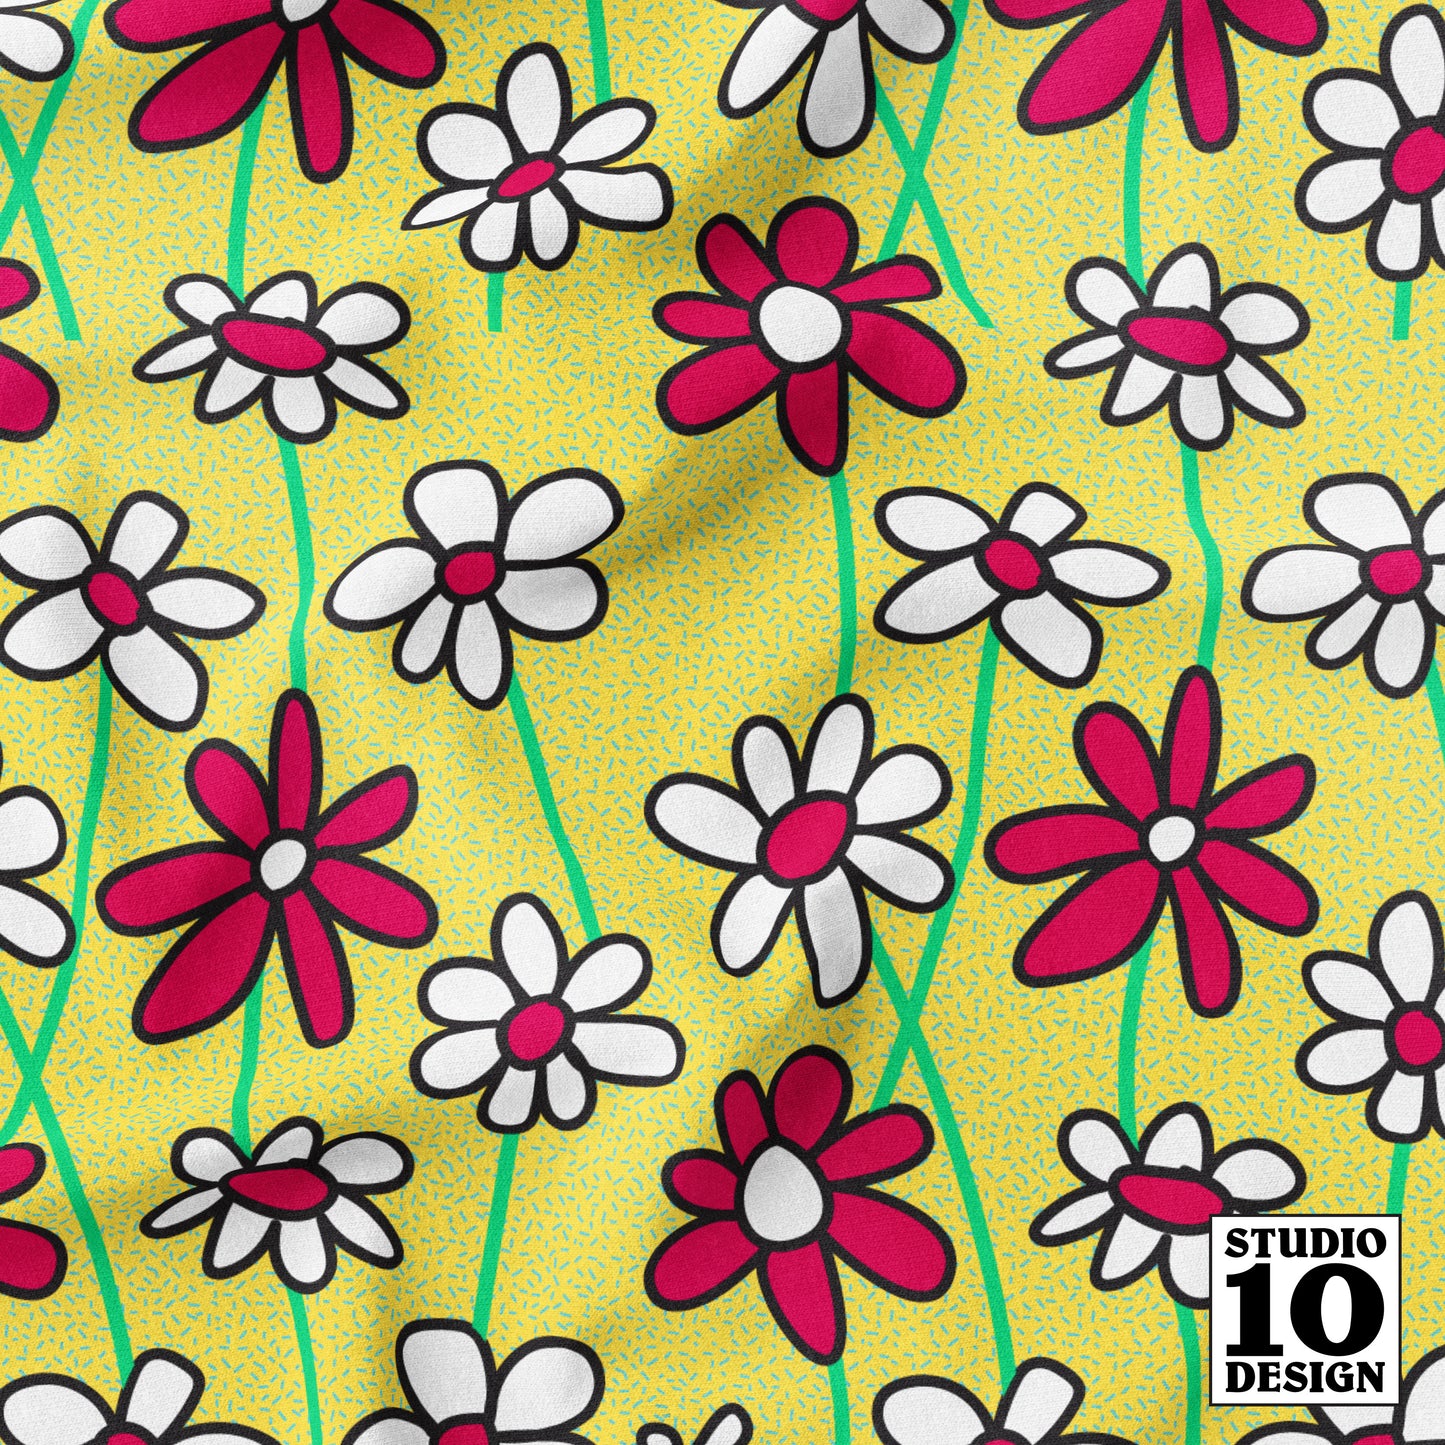 Flower Pop! Daisies Printed Fabric by Studio Ten Design